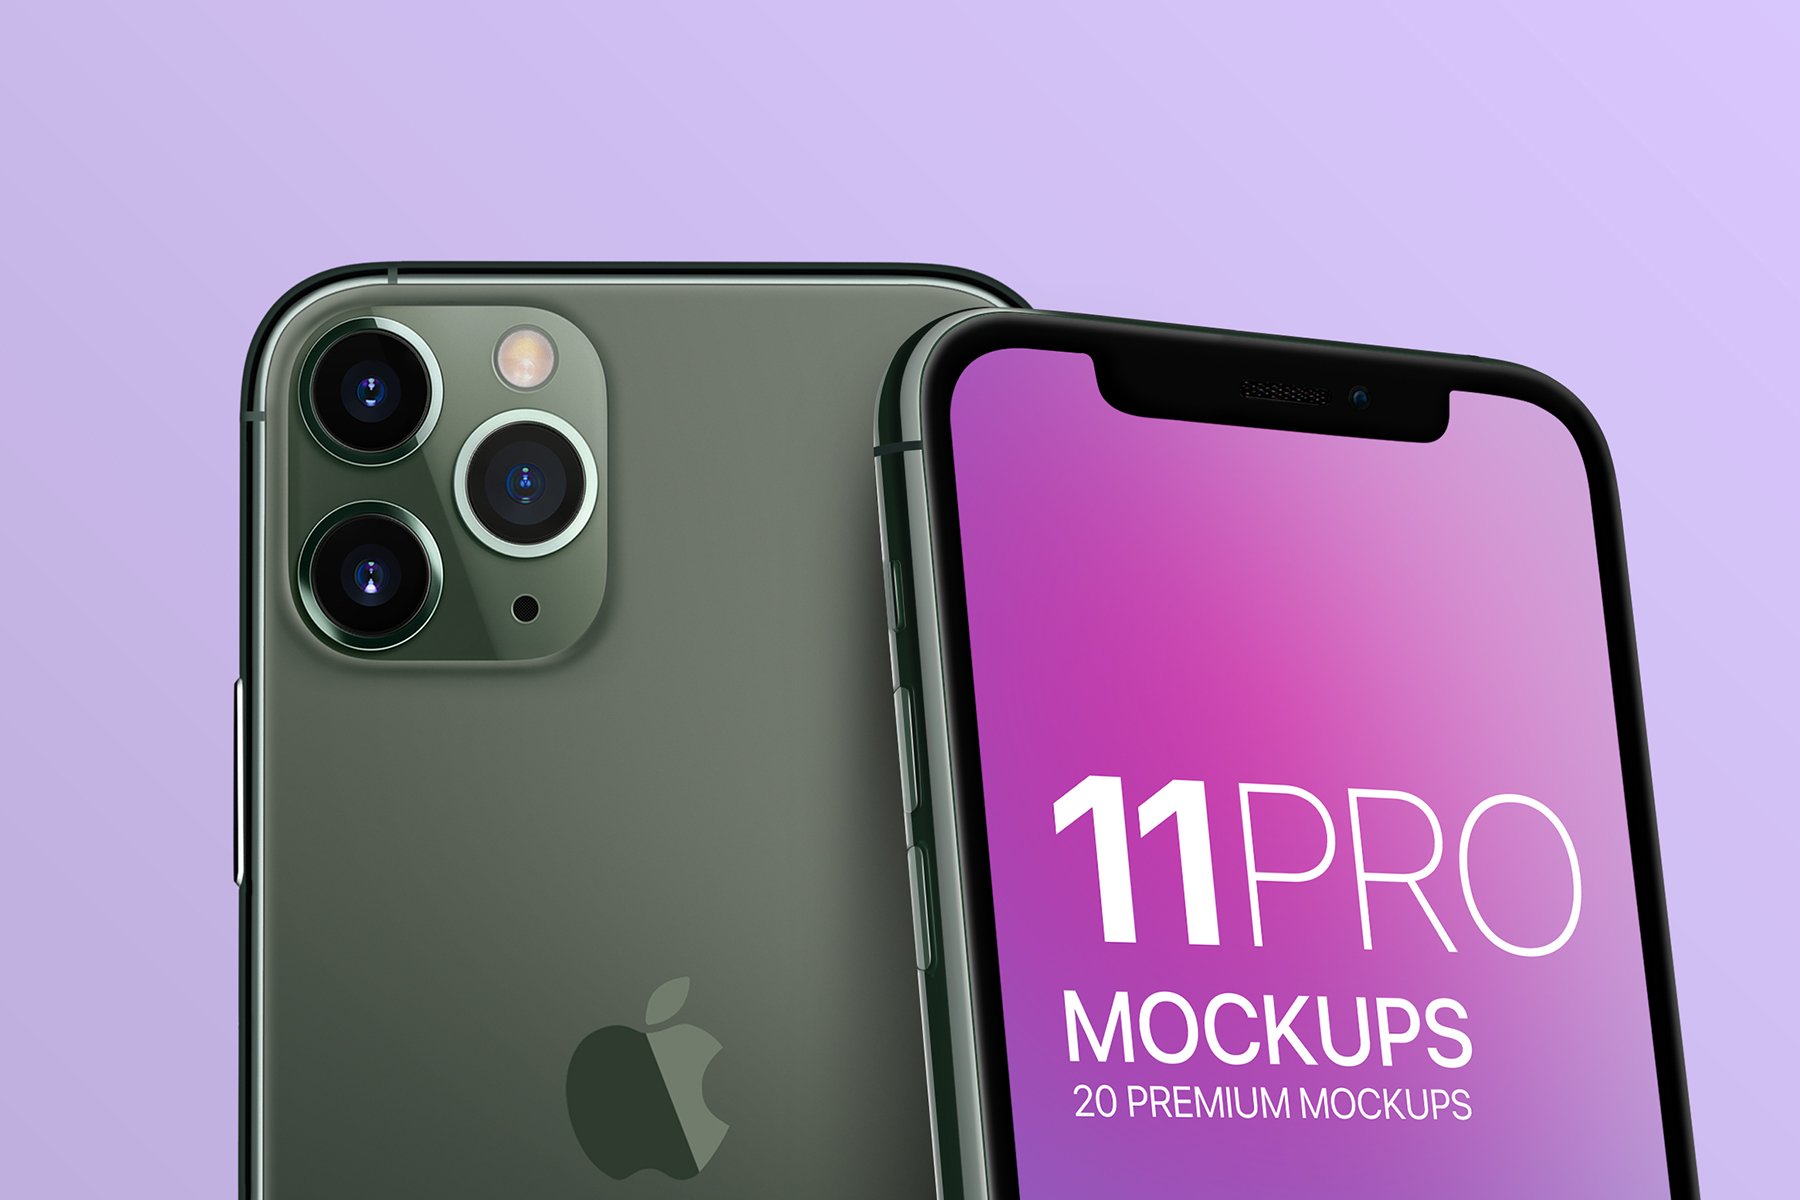 iPhone 11 Pro Display Mockups